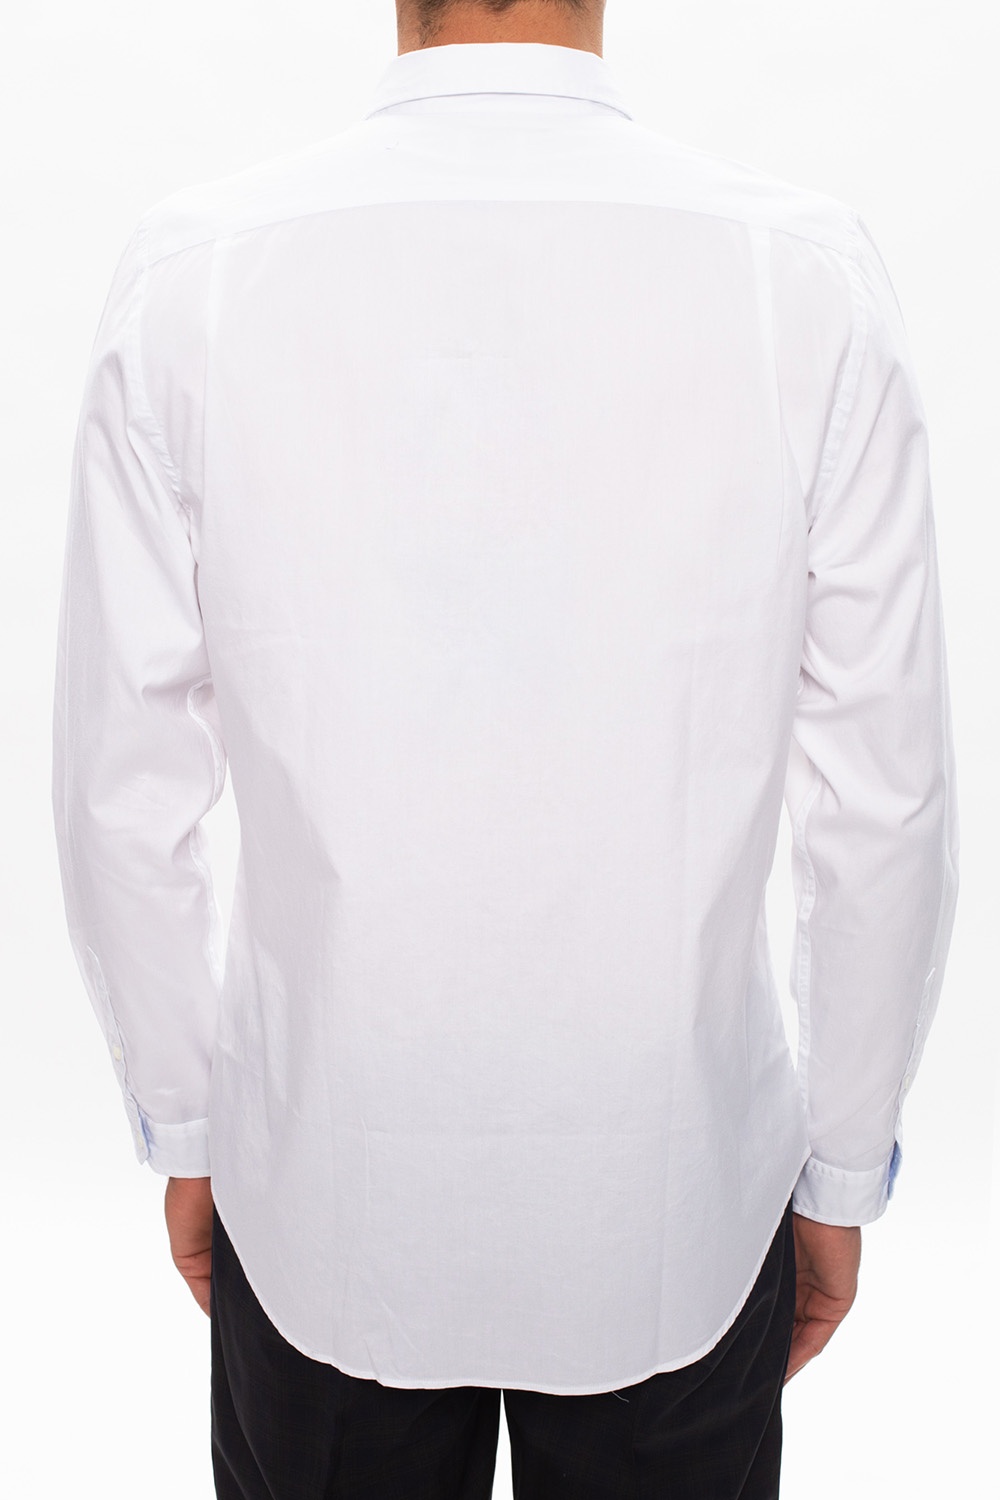 NEOMACHI ZENKO T-Shirt Donna nero T-shirts manches courtes Vêtements Femme Jaune Taille S